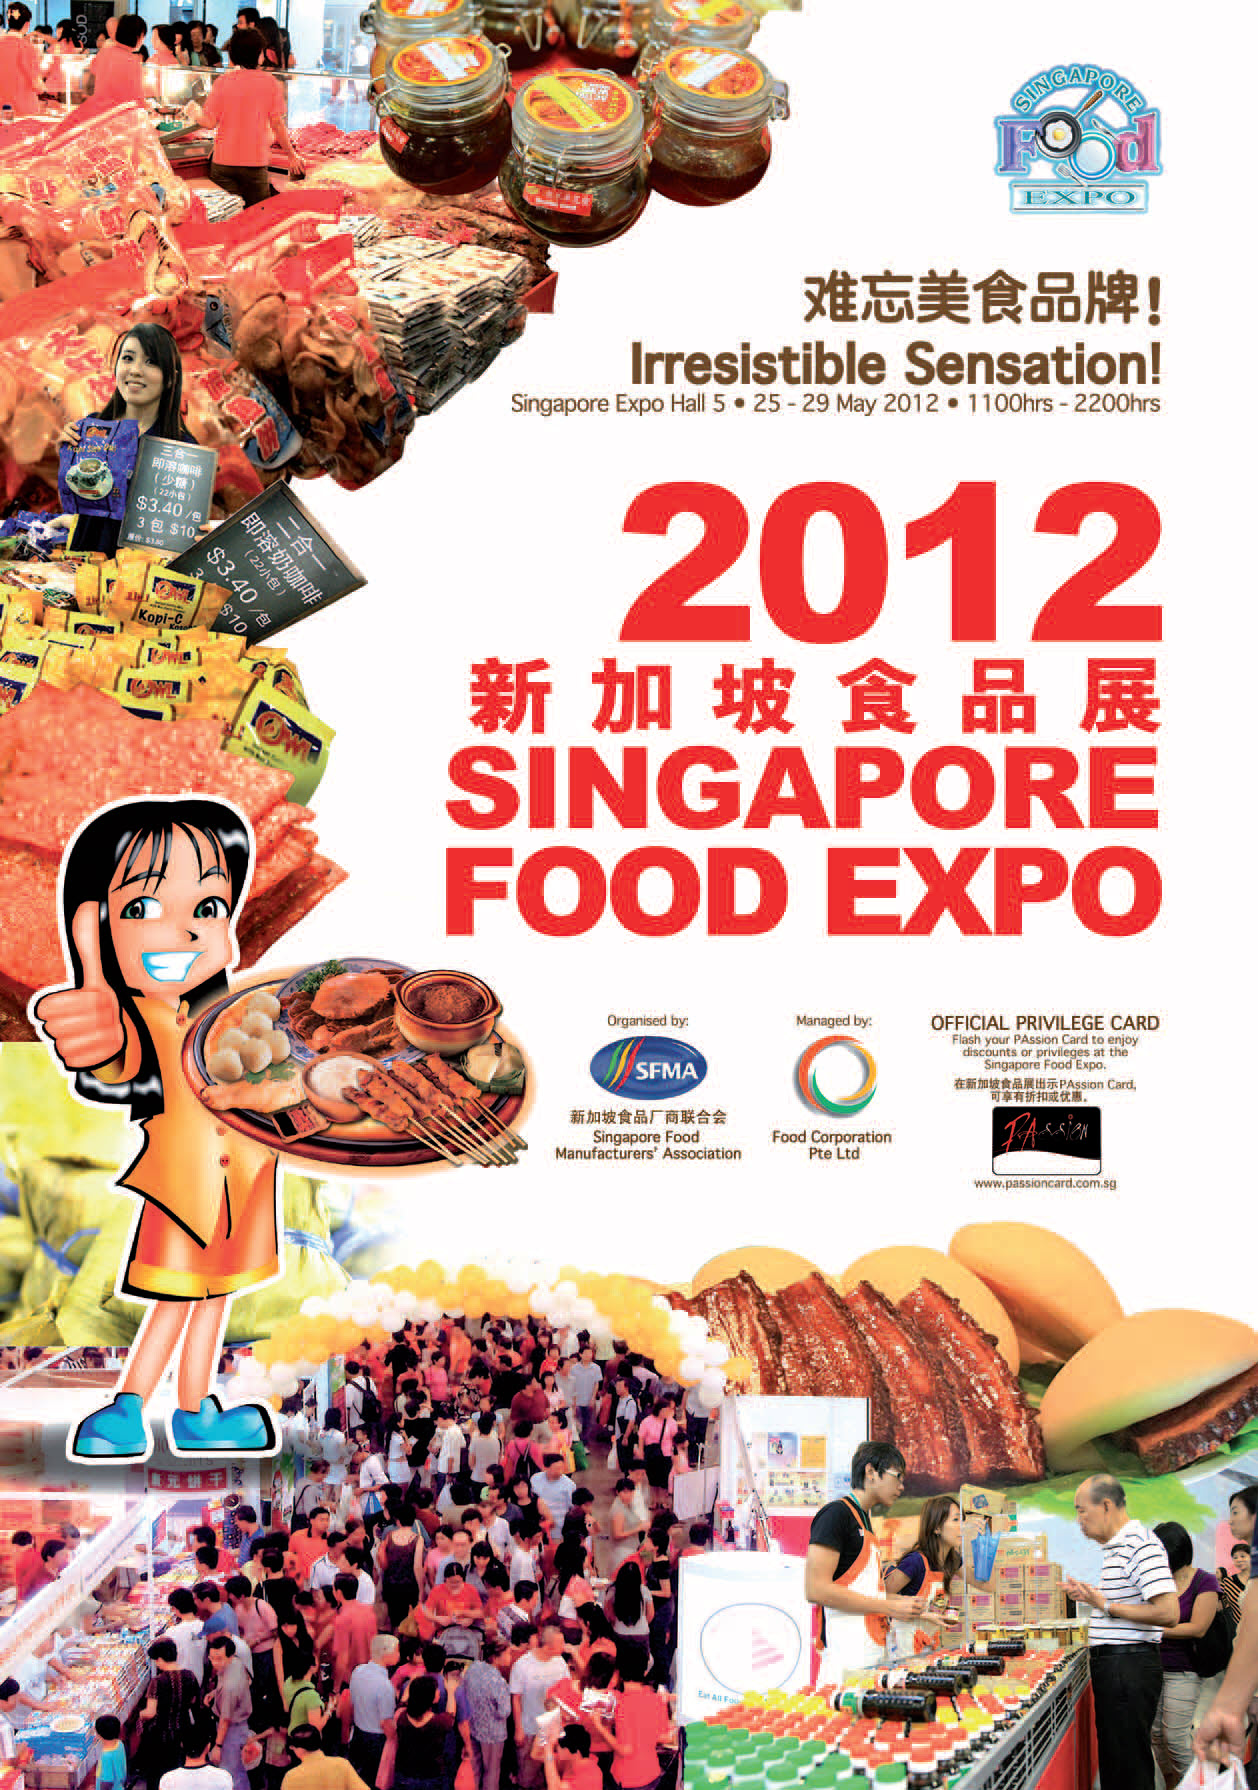 SINGAPORE FOOD EXPO 2012 – SIMPLY SENSATIONAL